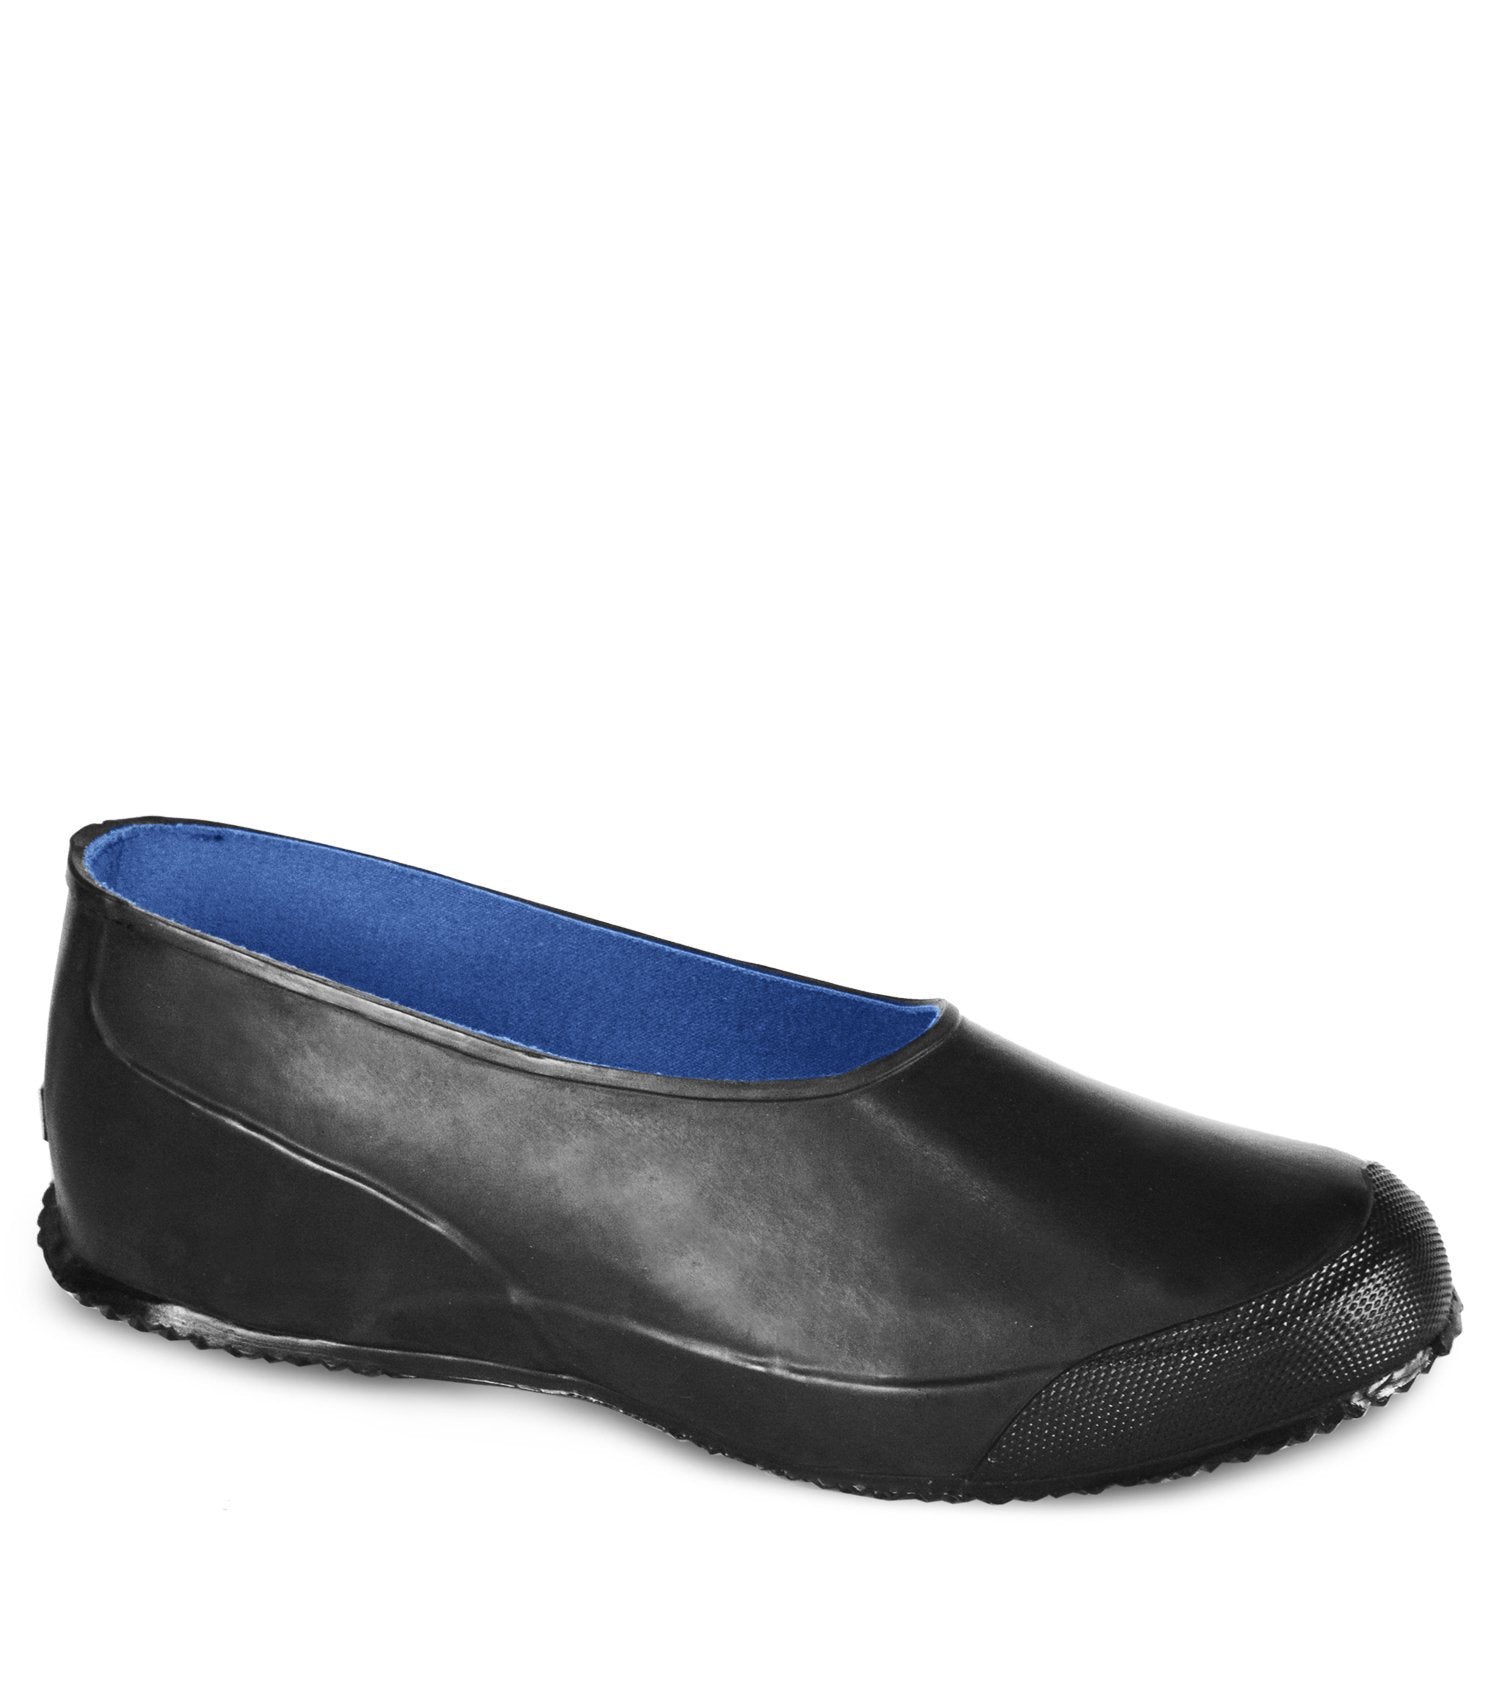 Acton Mocassin Urban Overshoes Waterproof Rubber | Black | Sizes 3 - 10 Work Boots - Cleanflow